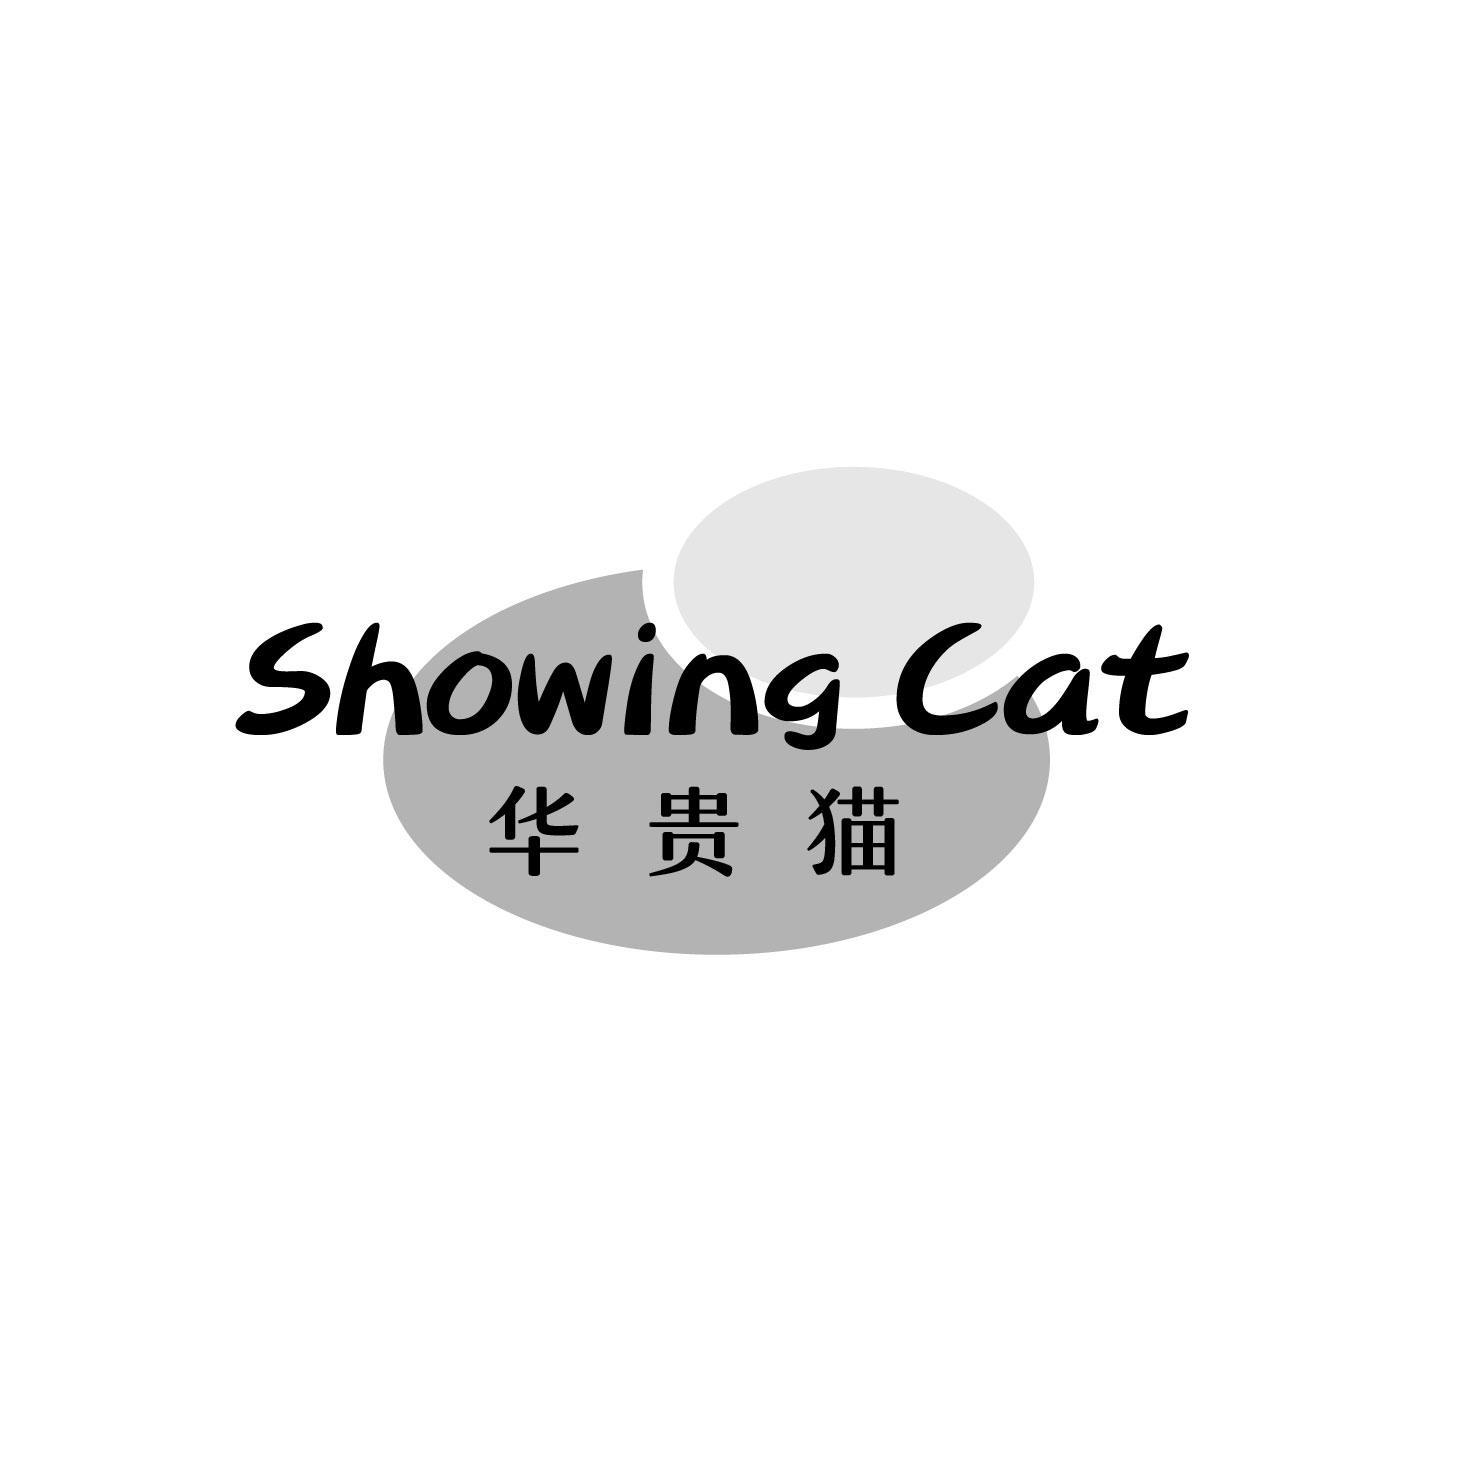 14类-珠宝钟表SHOWING CAT 华贵猫商标转让